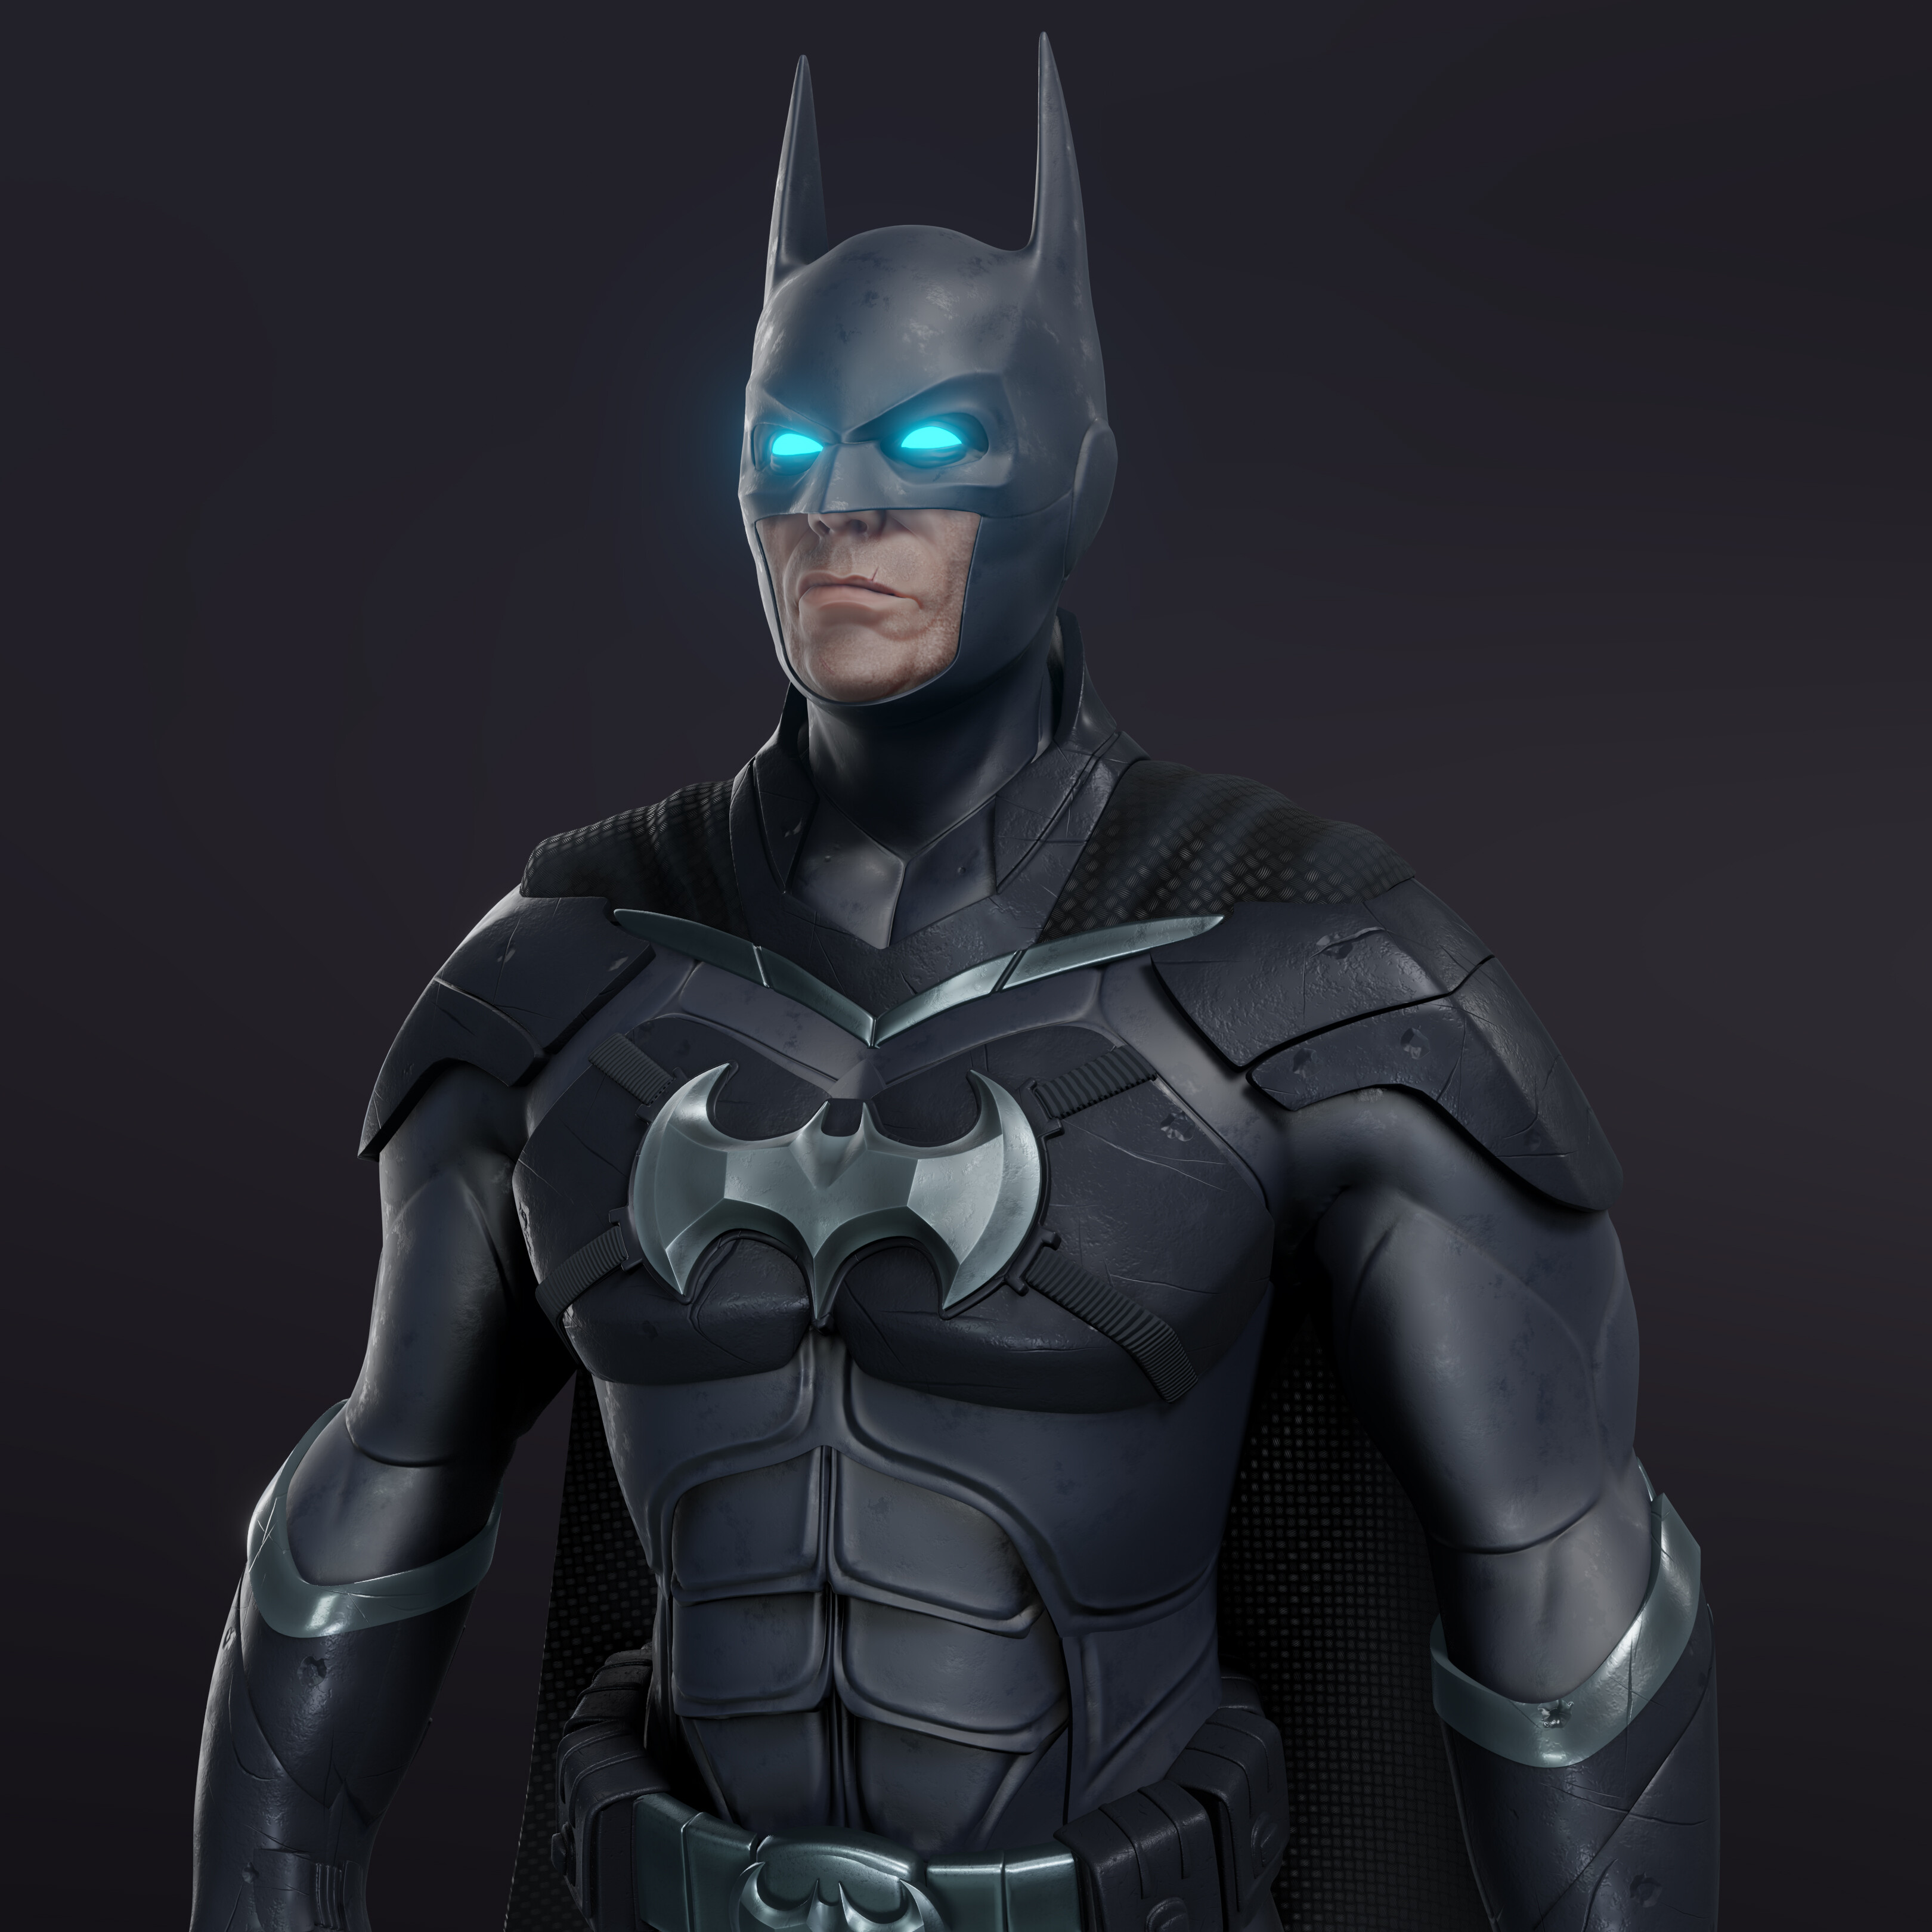 Batman in Eevee blender  - Finished Projects - Blender Artists  Community